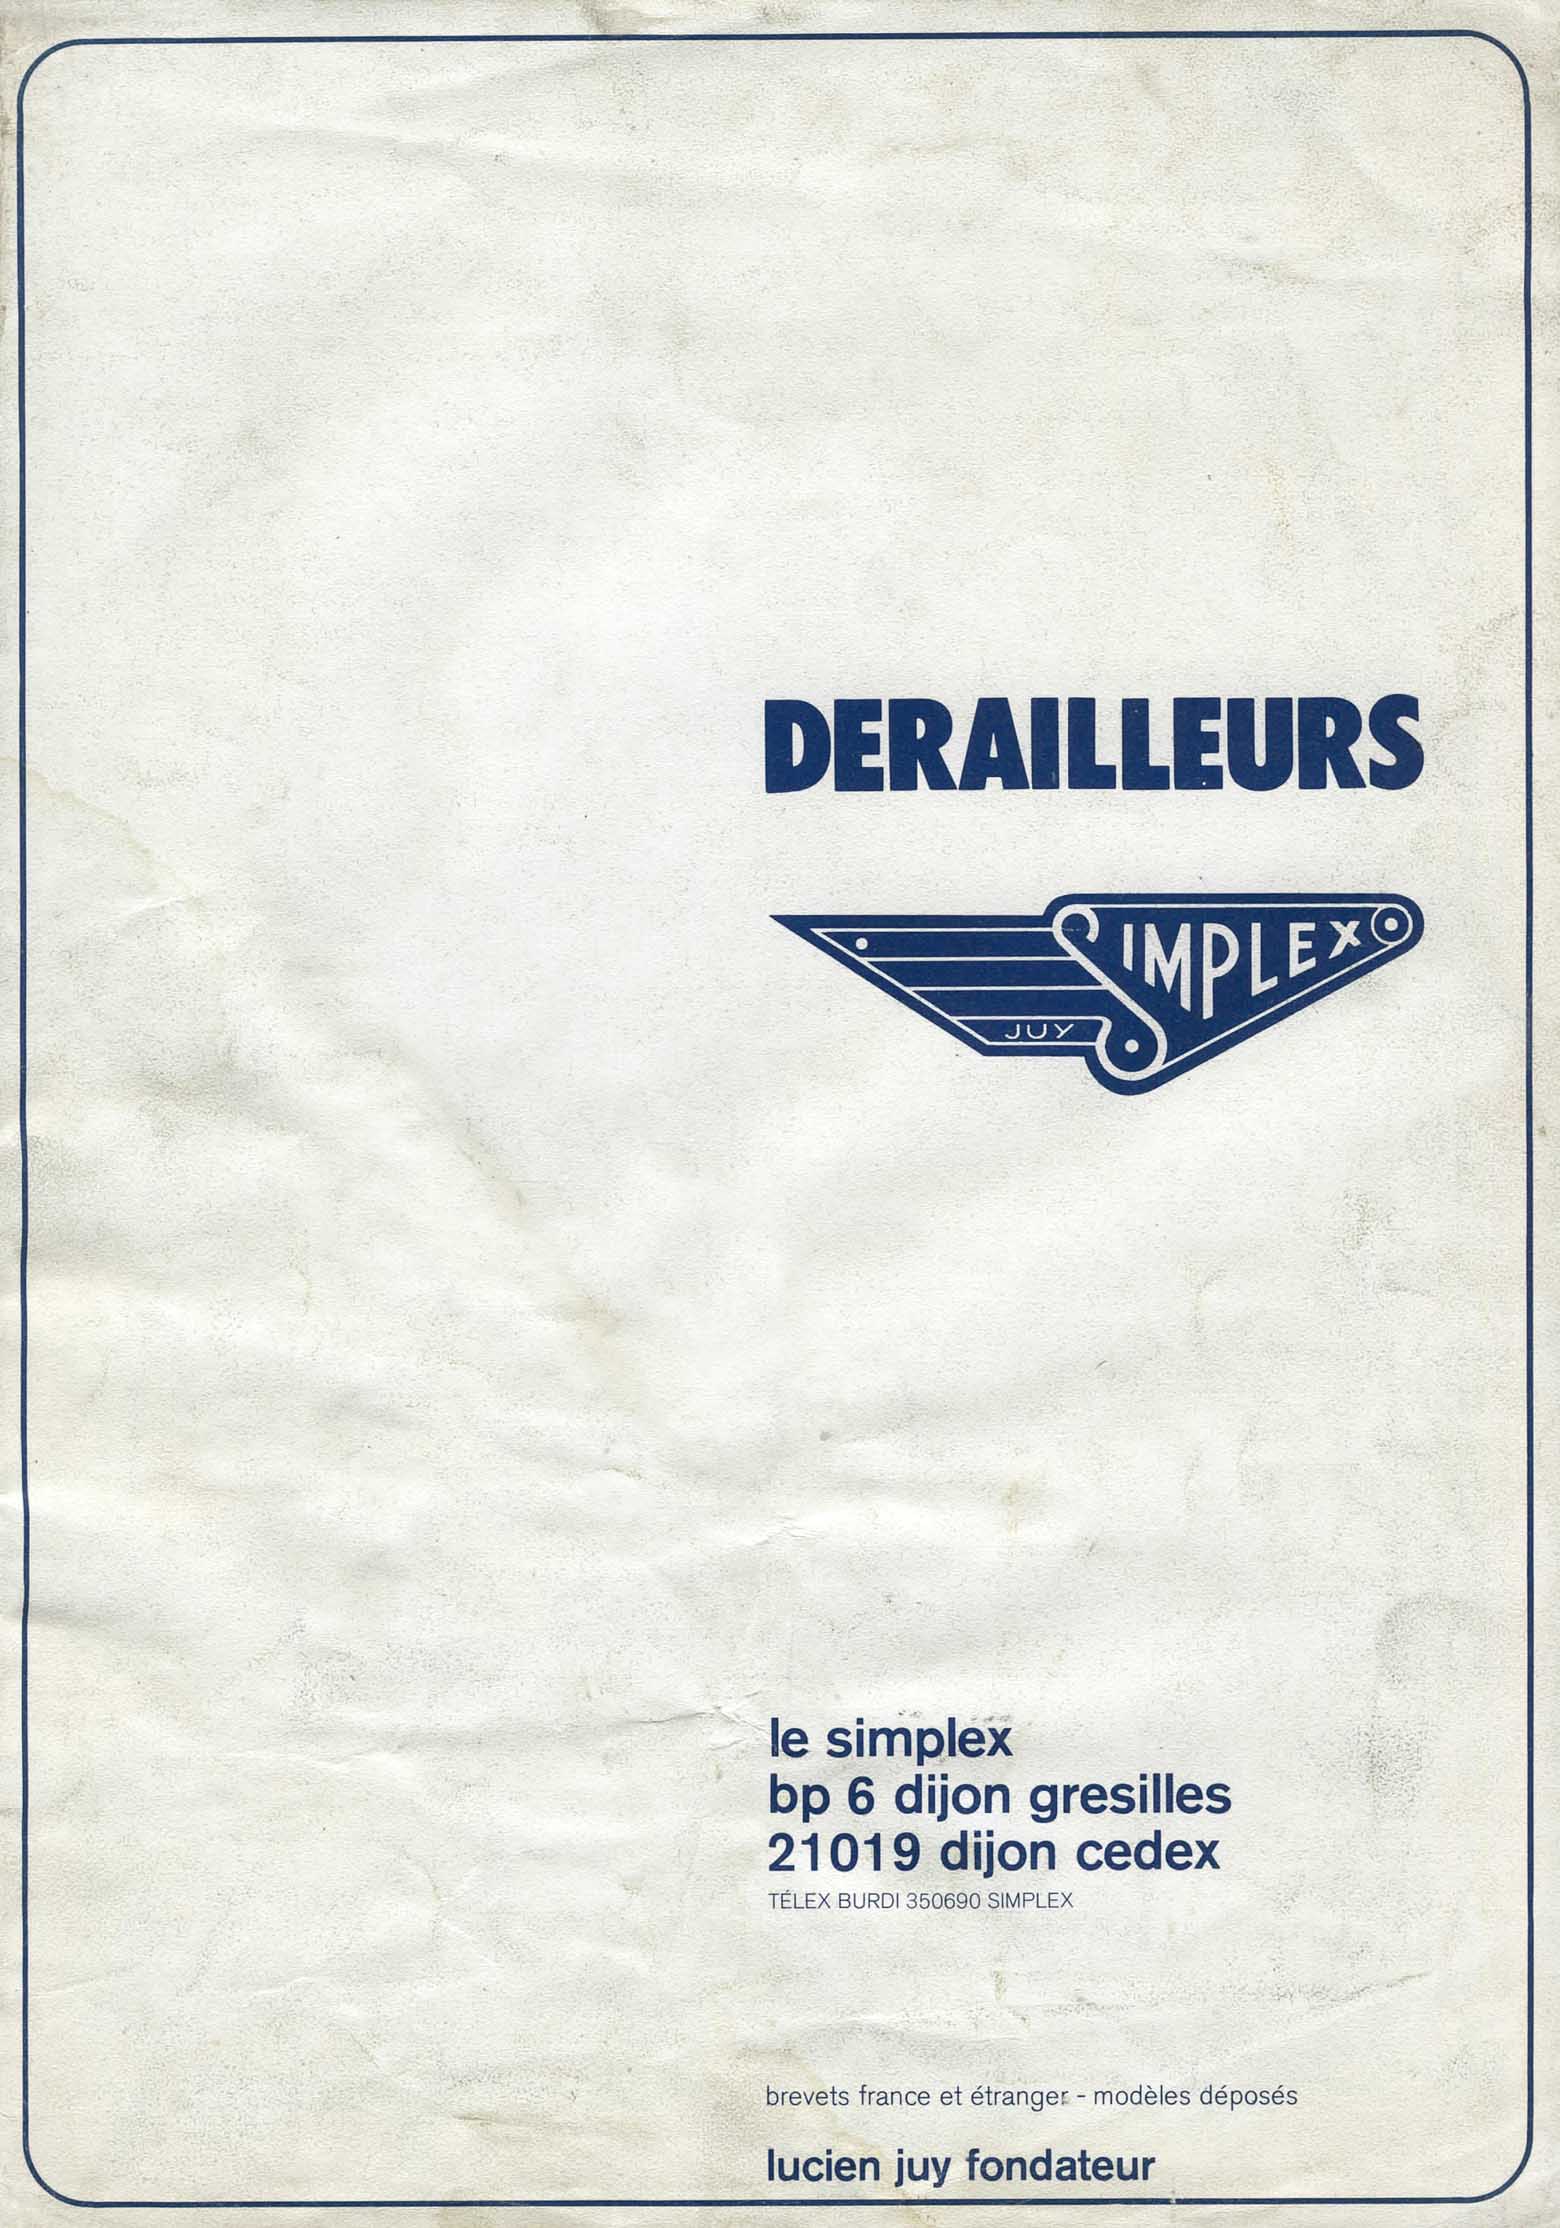 Simplex - Derailleurs 1977 scan 1 main image